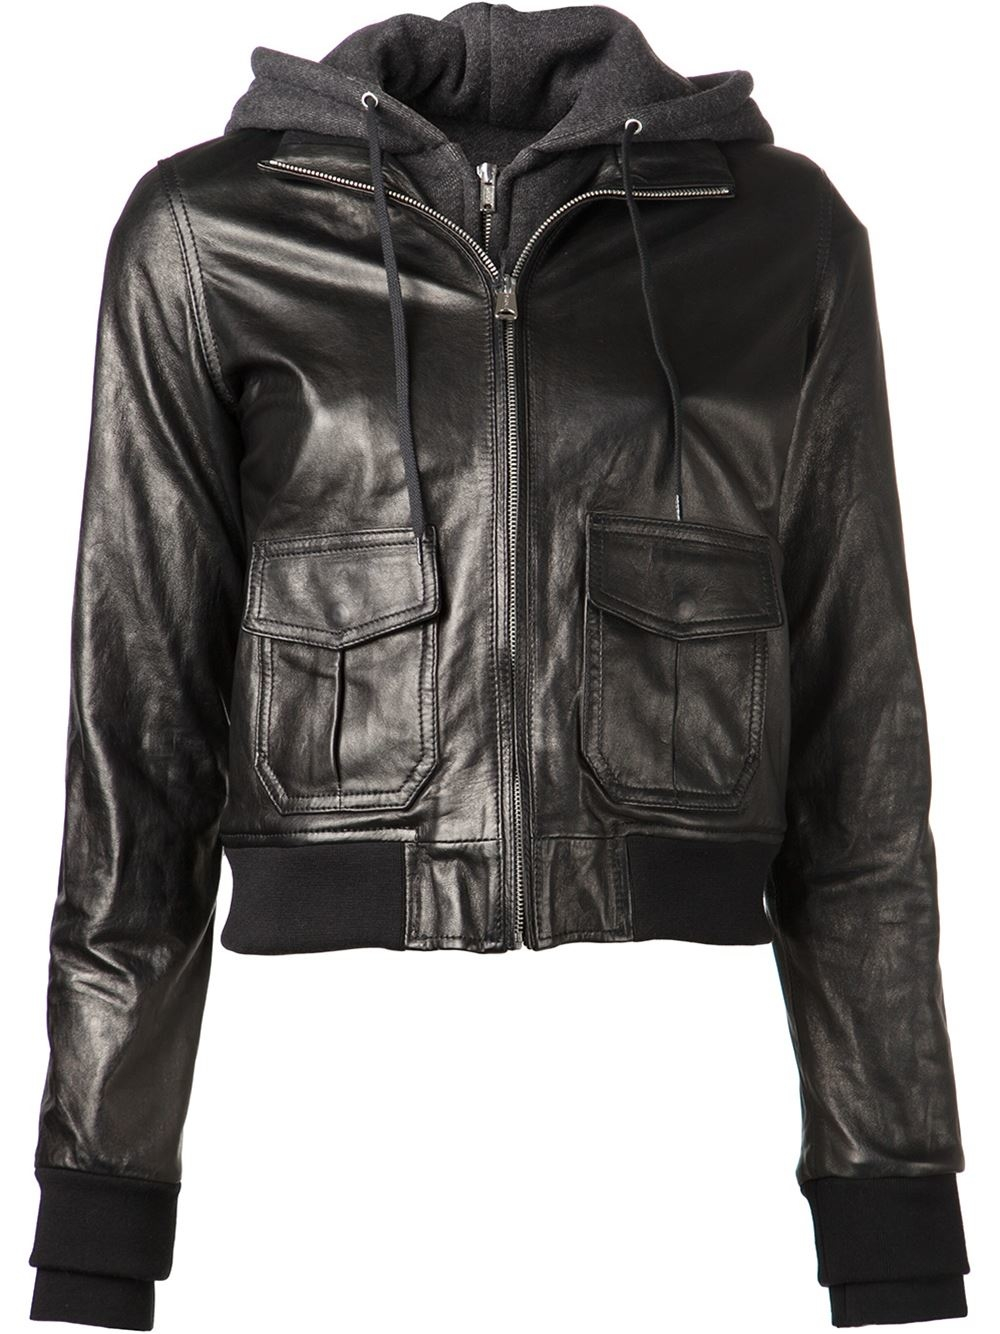 Lyst - R13 Hooded Leather Flight Jacket in Black